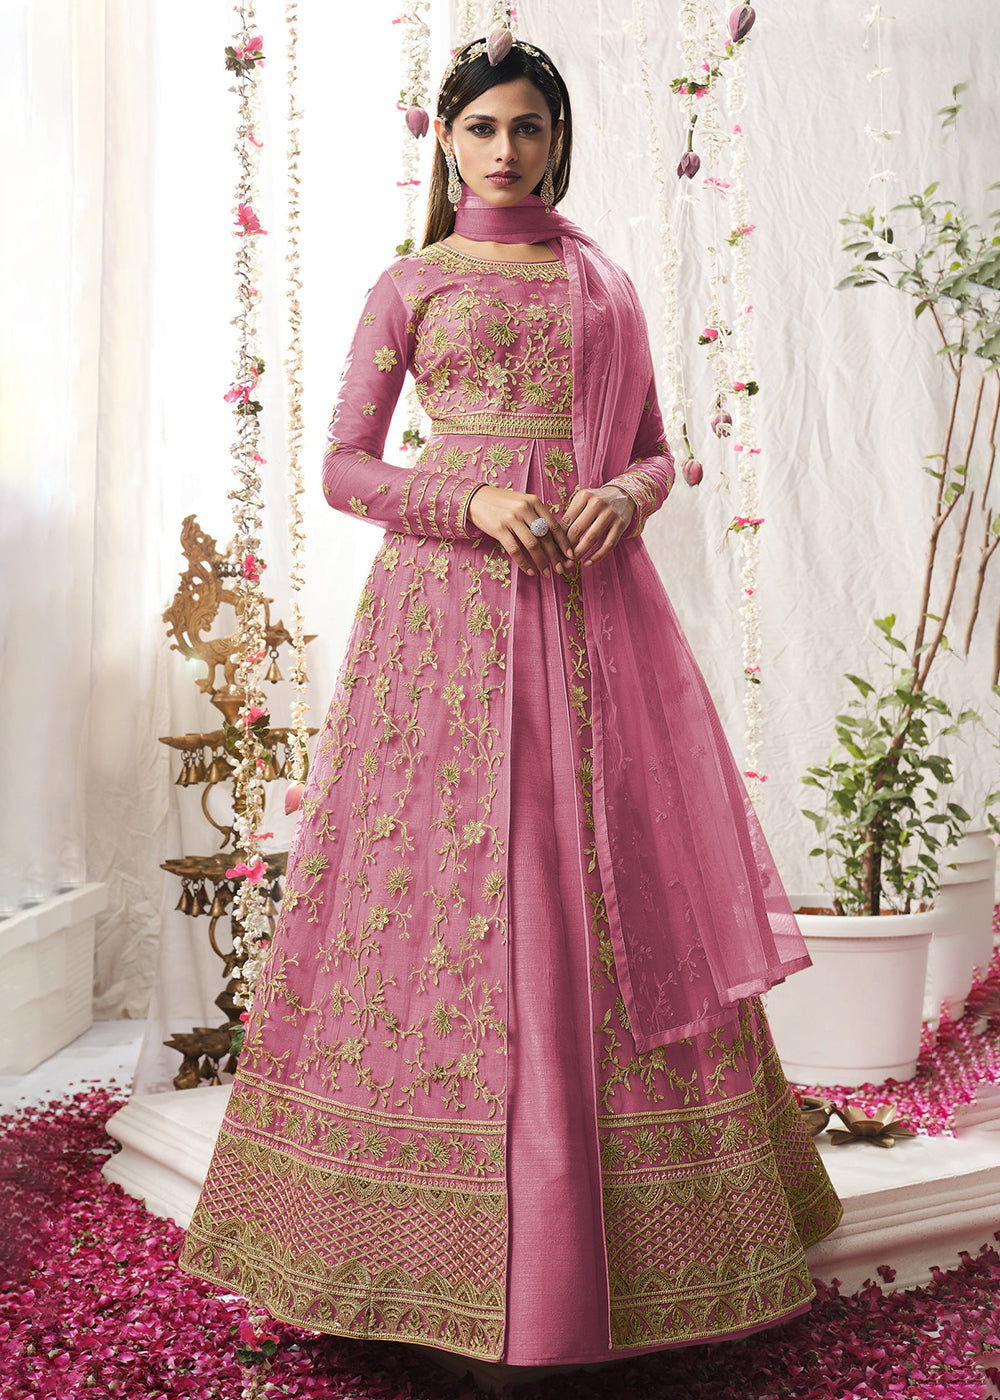 Buy Now Striking Light Pink Wedding Festive Floor Length Anarkali Suit Online in USA, UK, Australia, New Zealand, Canada & Worldwide at Empress Clothing. 